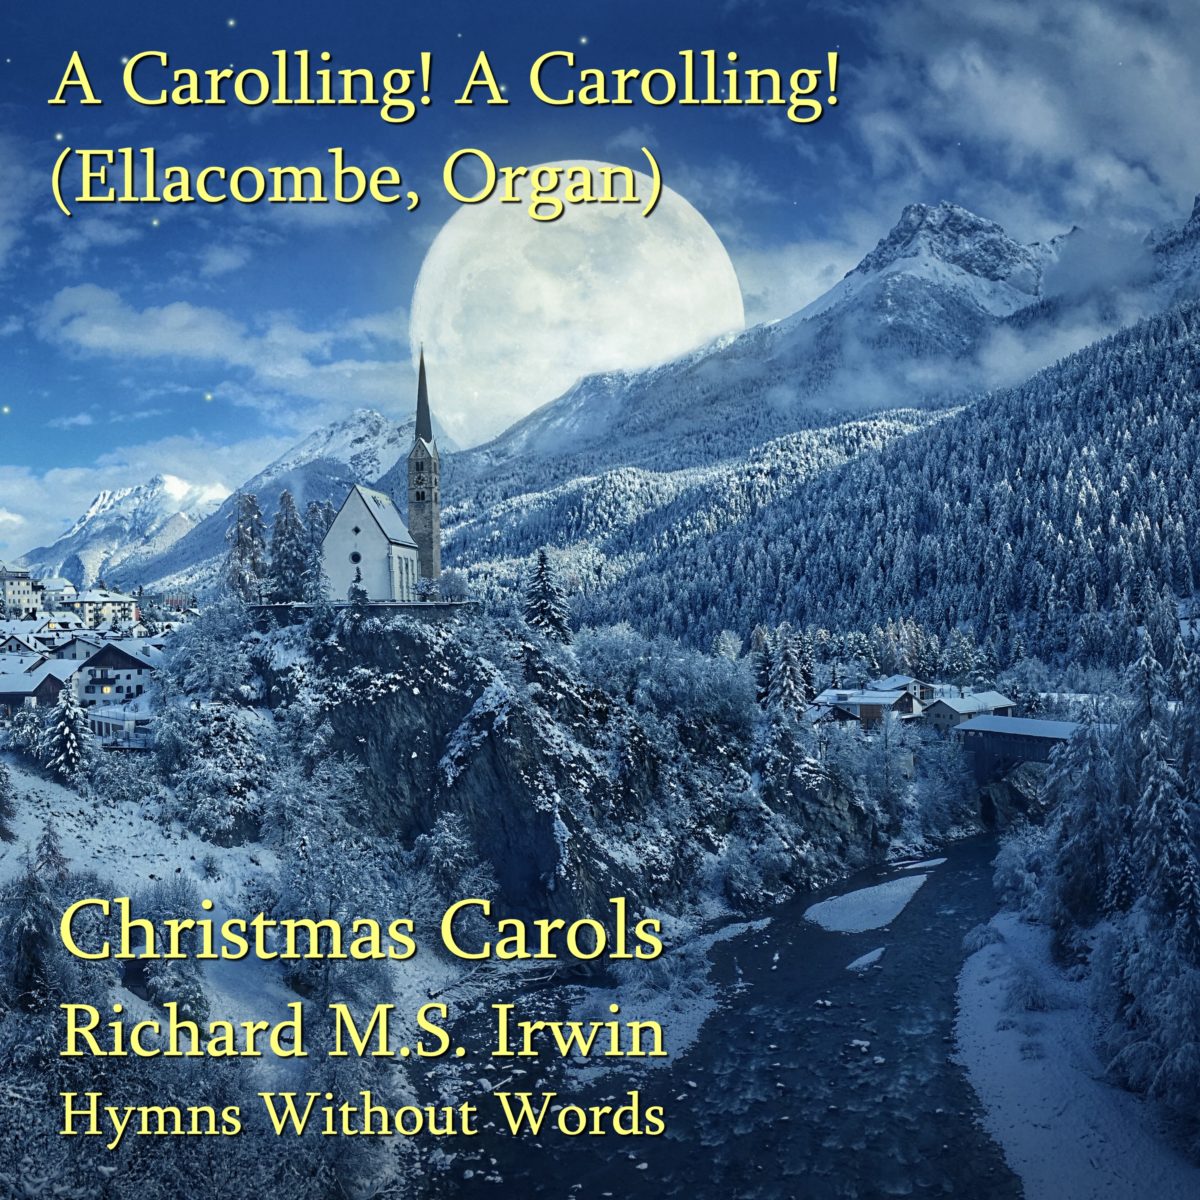 A Carolling! A Carolling!